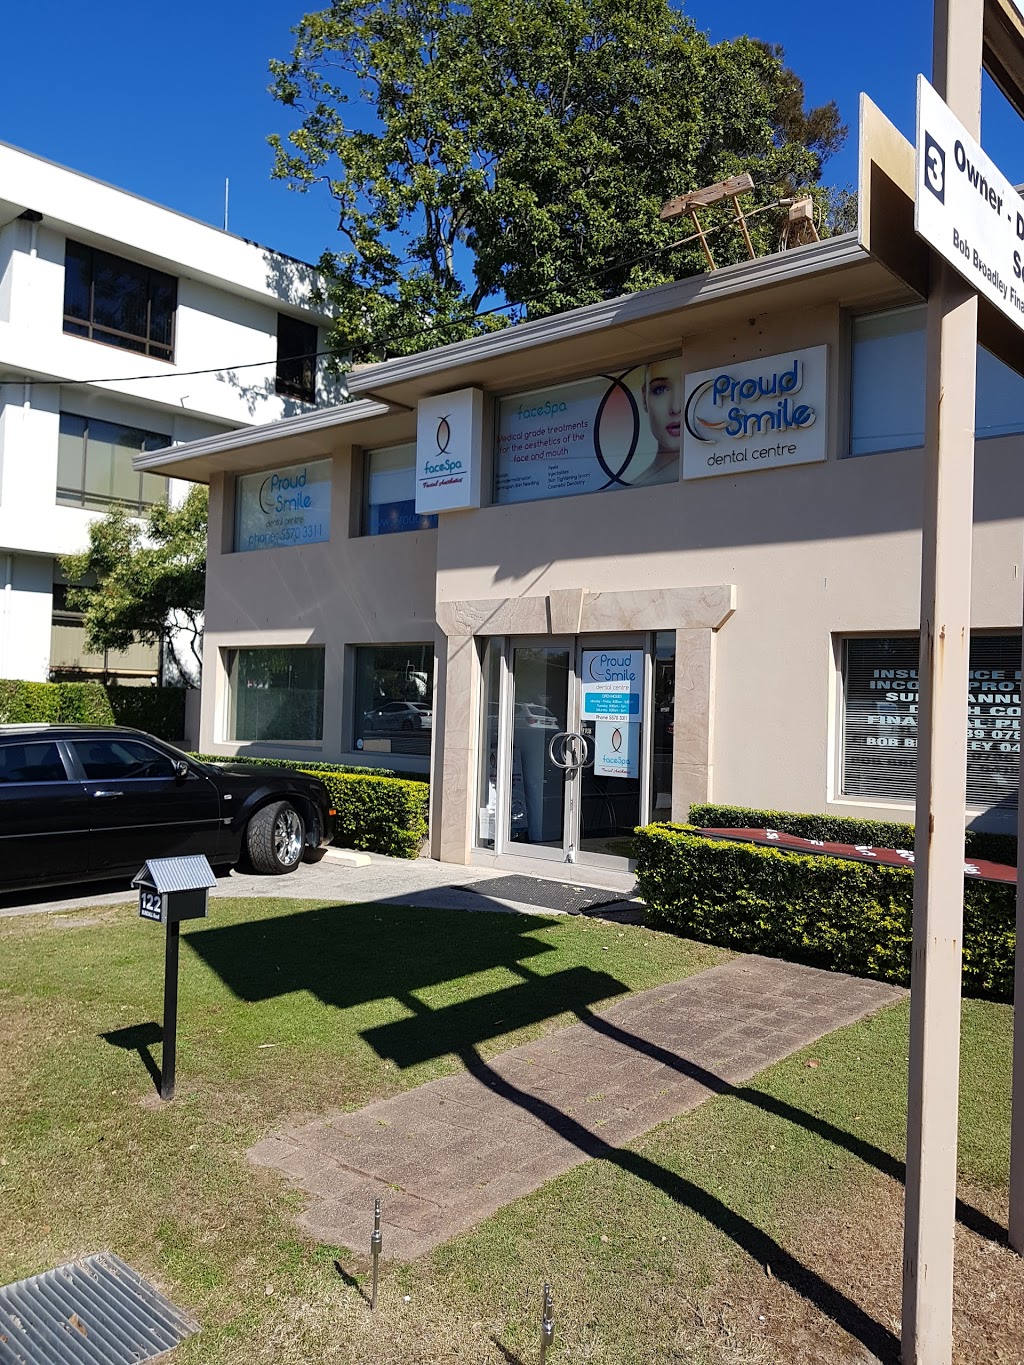 Proud Smile Dental Centre | 122 Bundall Rd, Bundall QLD 4217, Australia | Phone: (07) 5570 3311